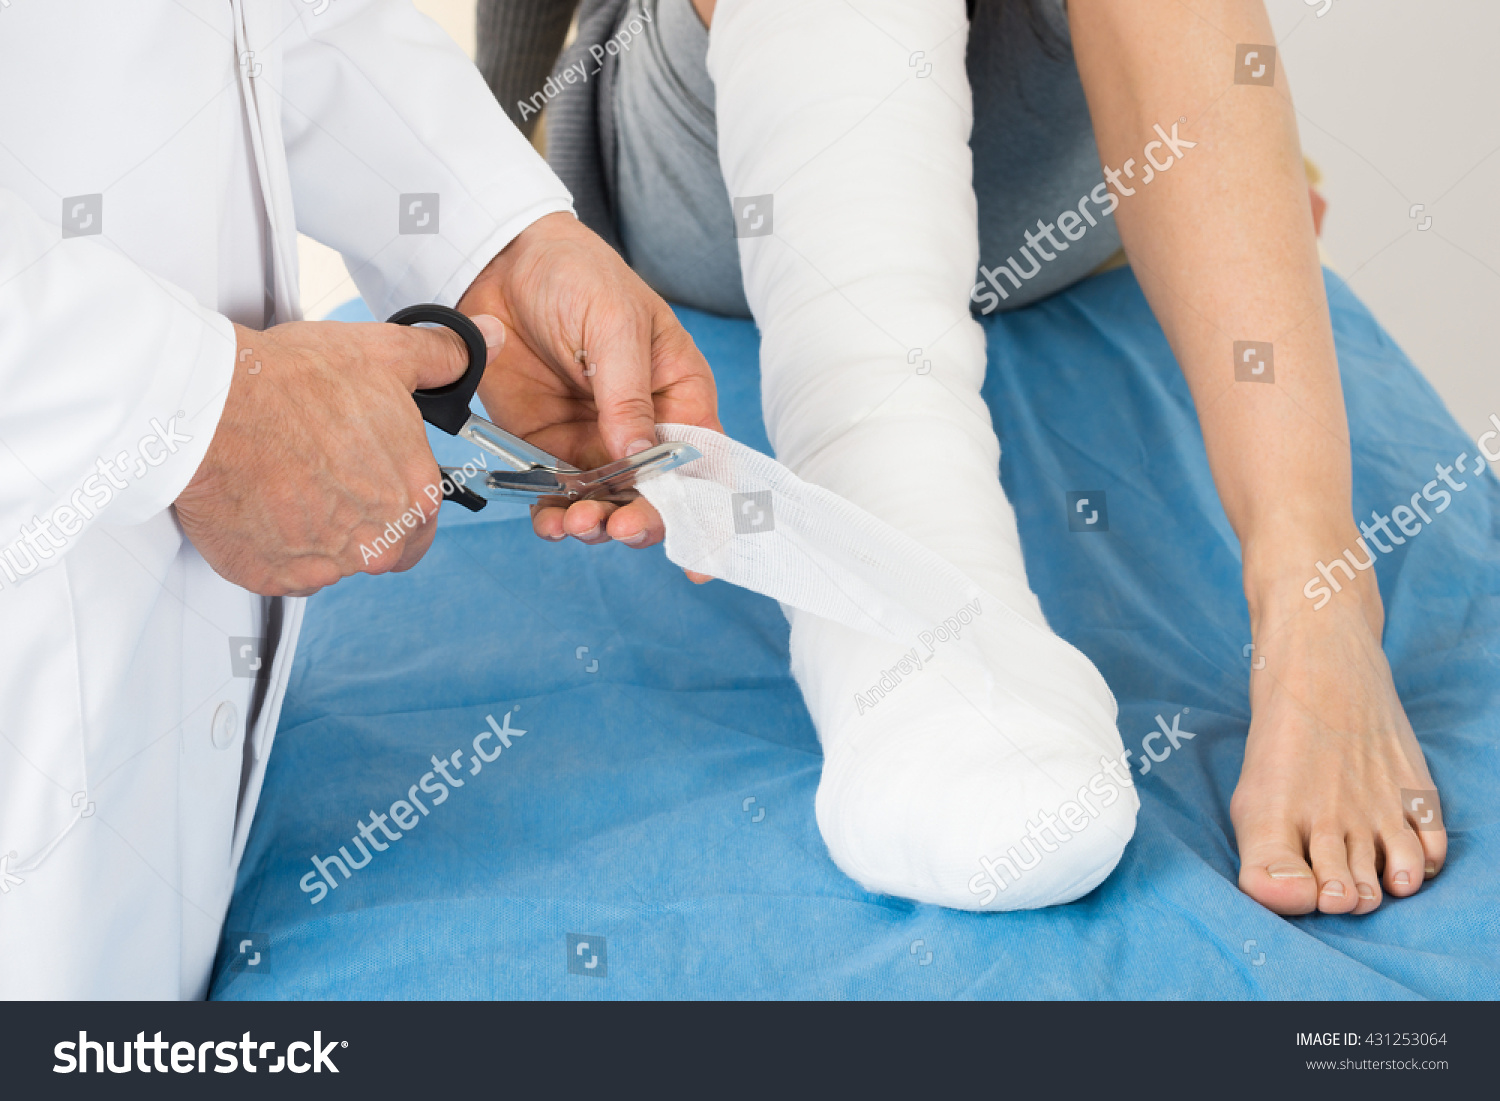 Doctor Bandaging Leg Of Patient In Hospital #431253064